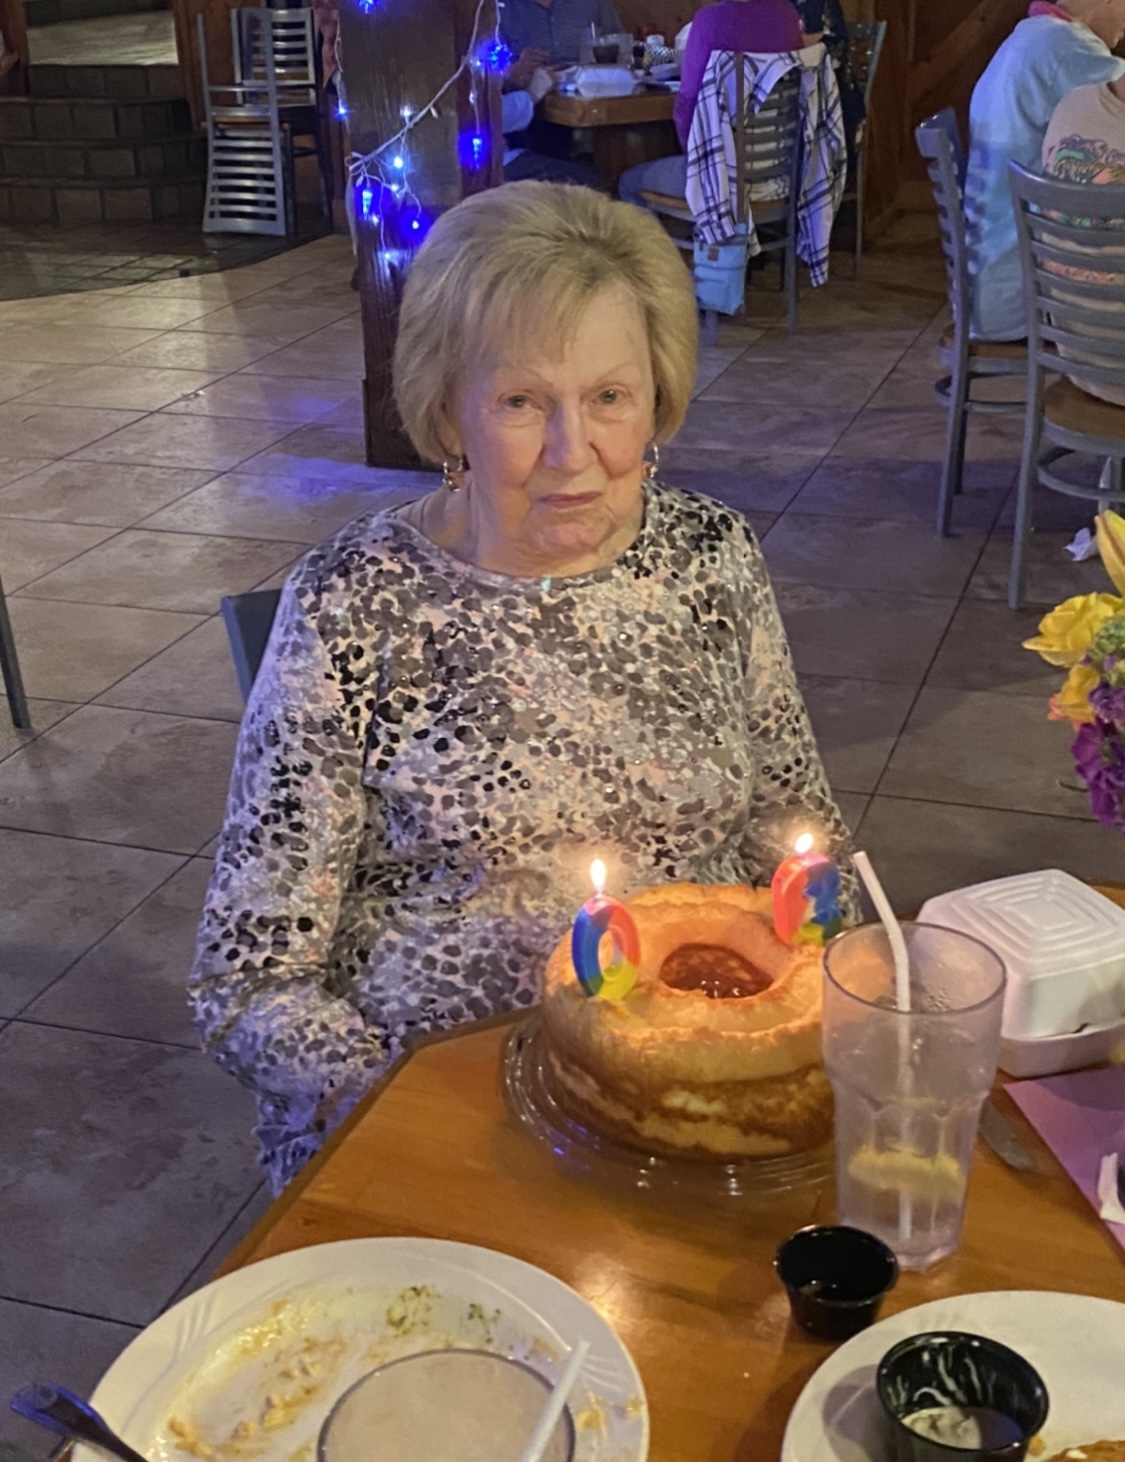 Gran on her 90th Birthday